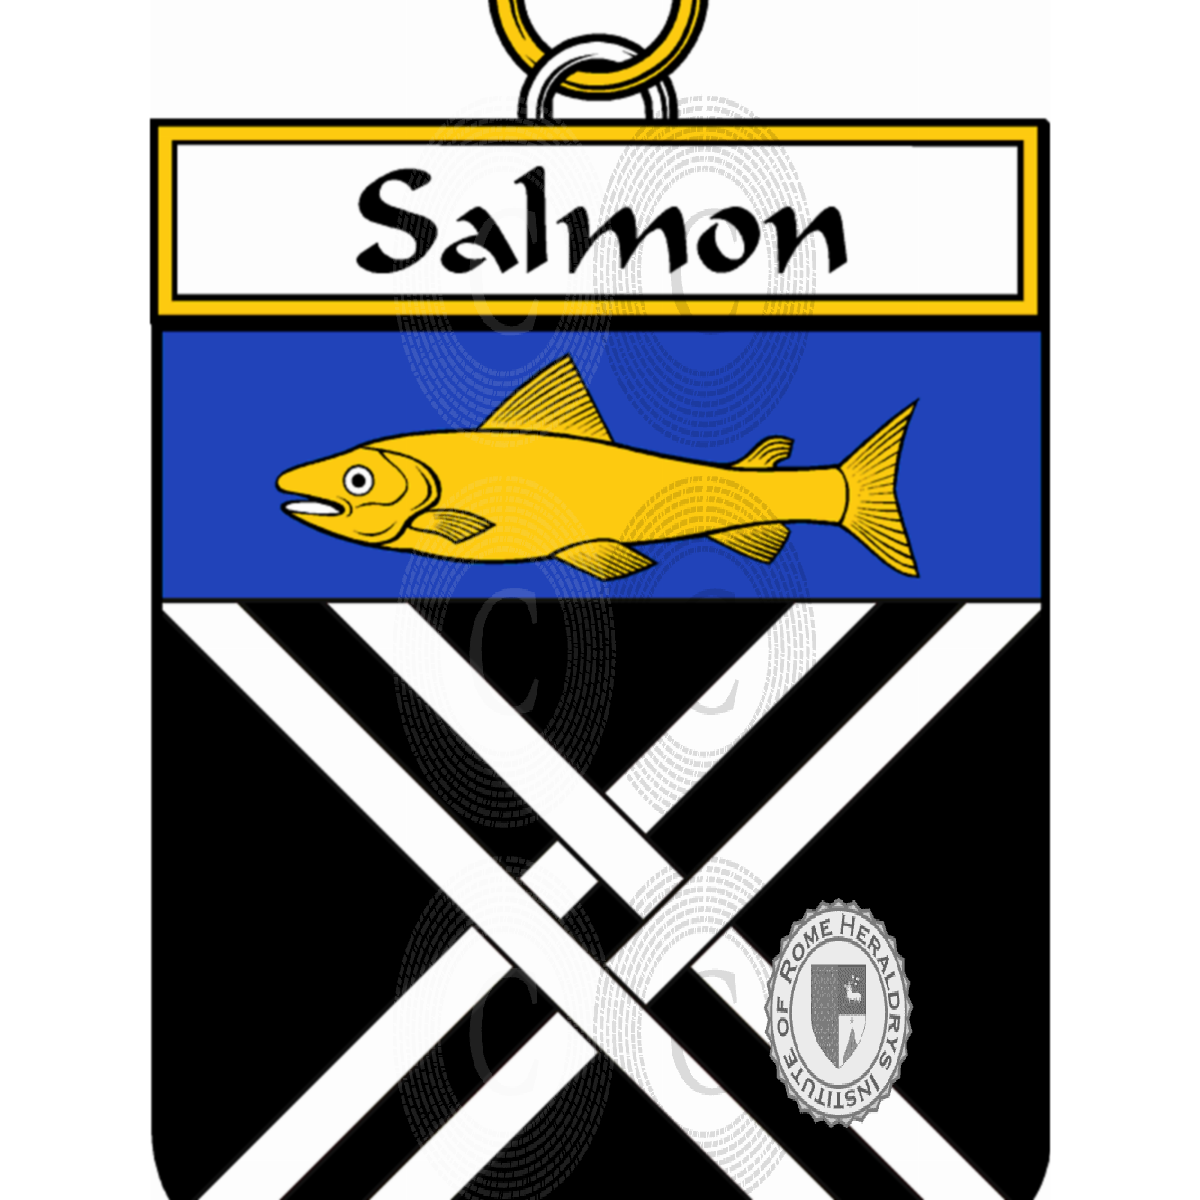 Escudo de la familiaSalmon, de Salmon,de Salmon de Belleverge,Salmon de Loiré,Salmon du Chastillier,Salmon du Clos